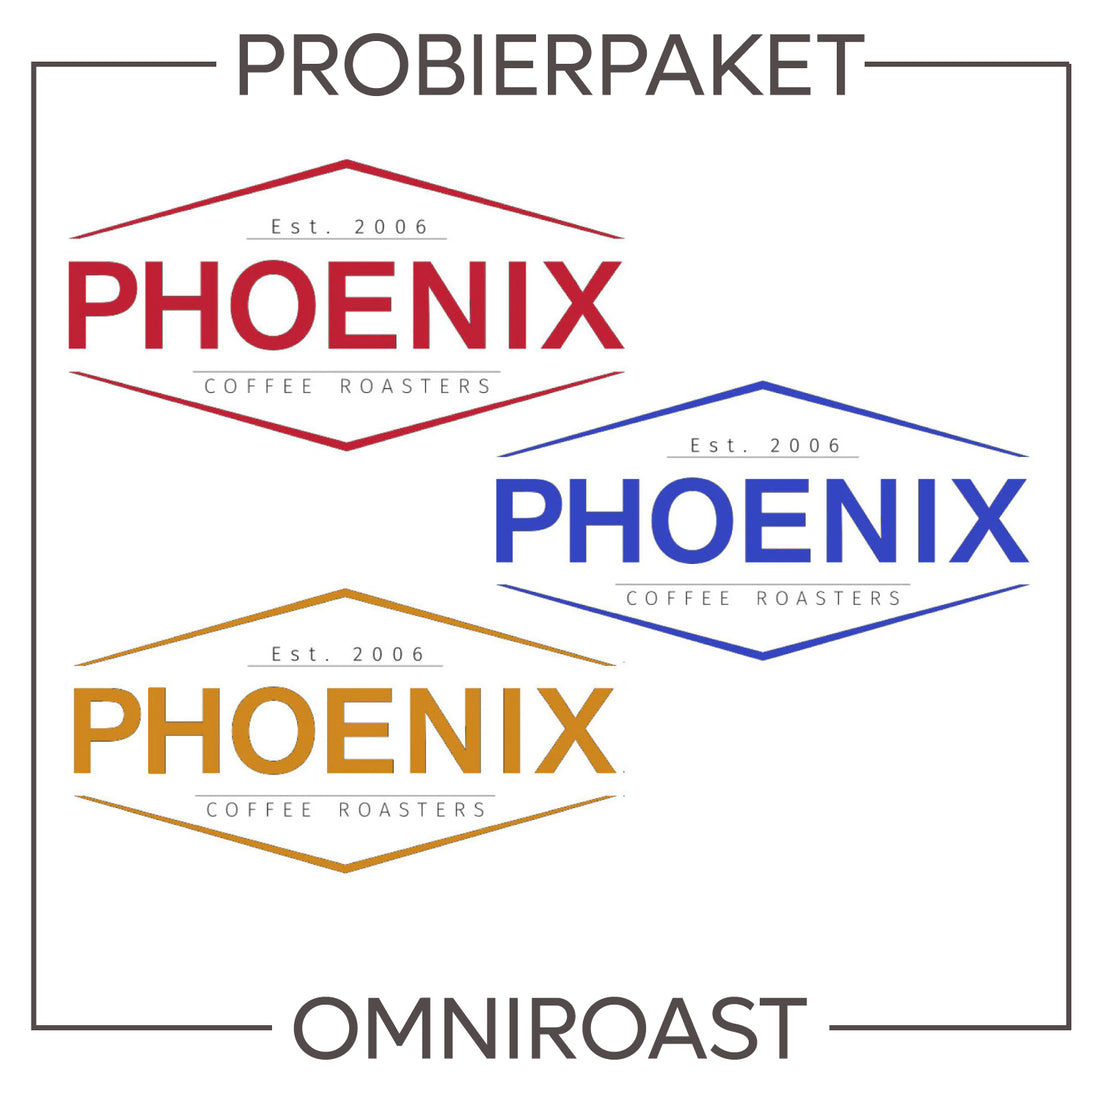 Probierpaket-Omniroast-phoenix